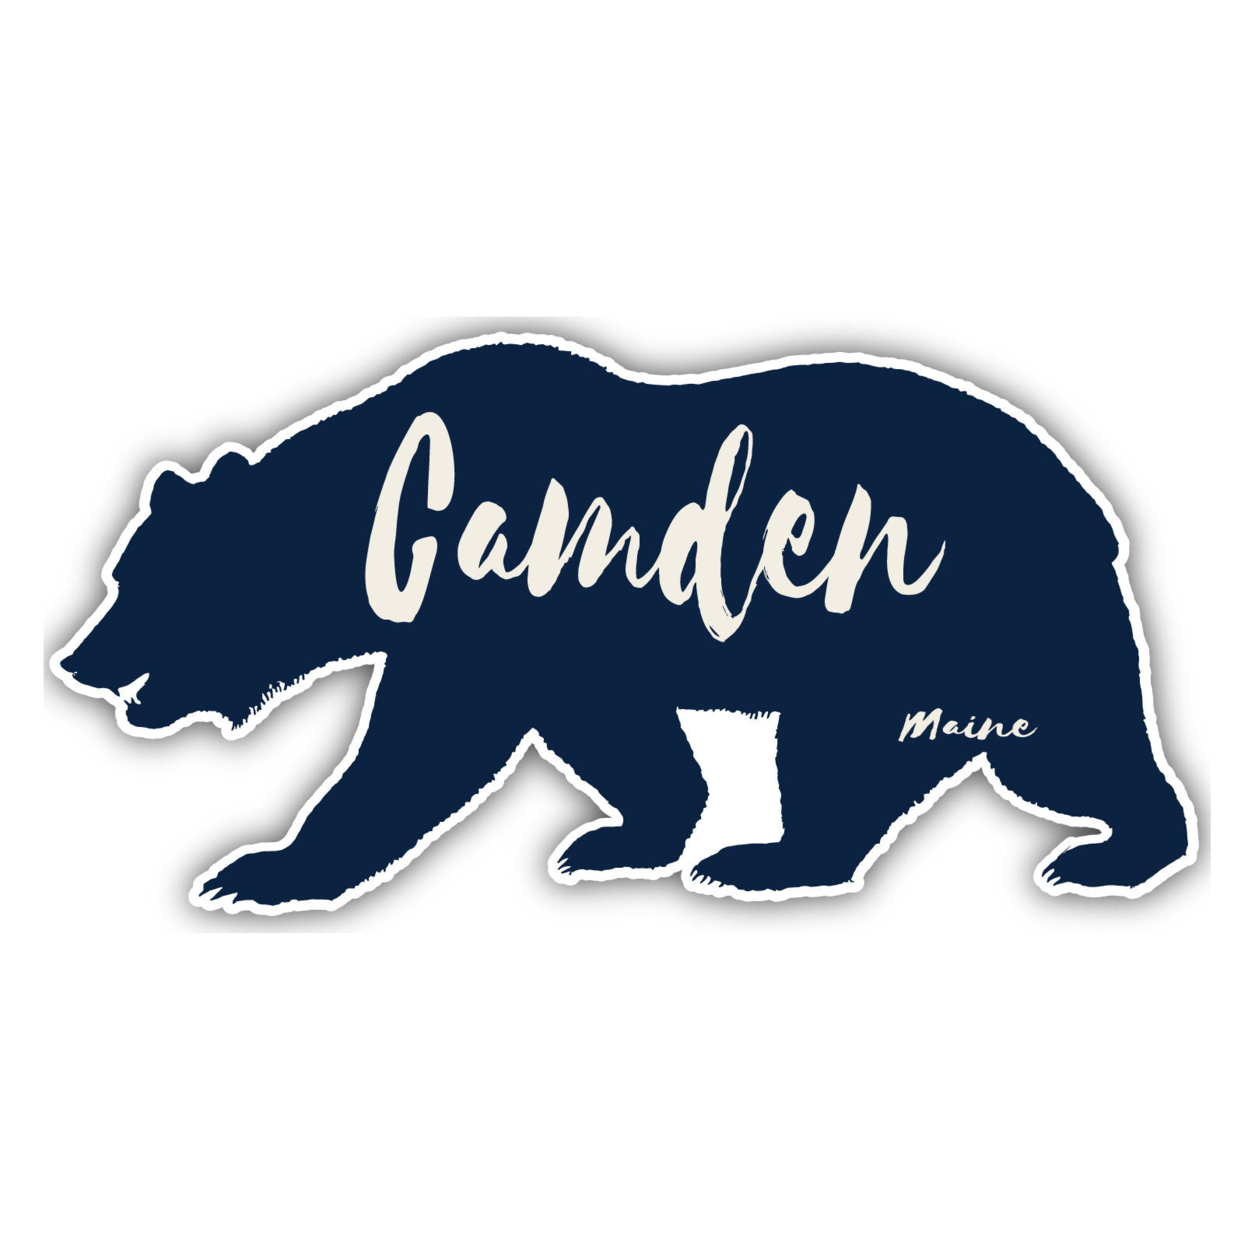 Camden Maine Souvenir Decorative Stickers (Choose Theme And Size) - Single Unit, 12-Inch, Tent